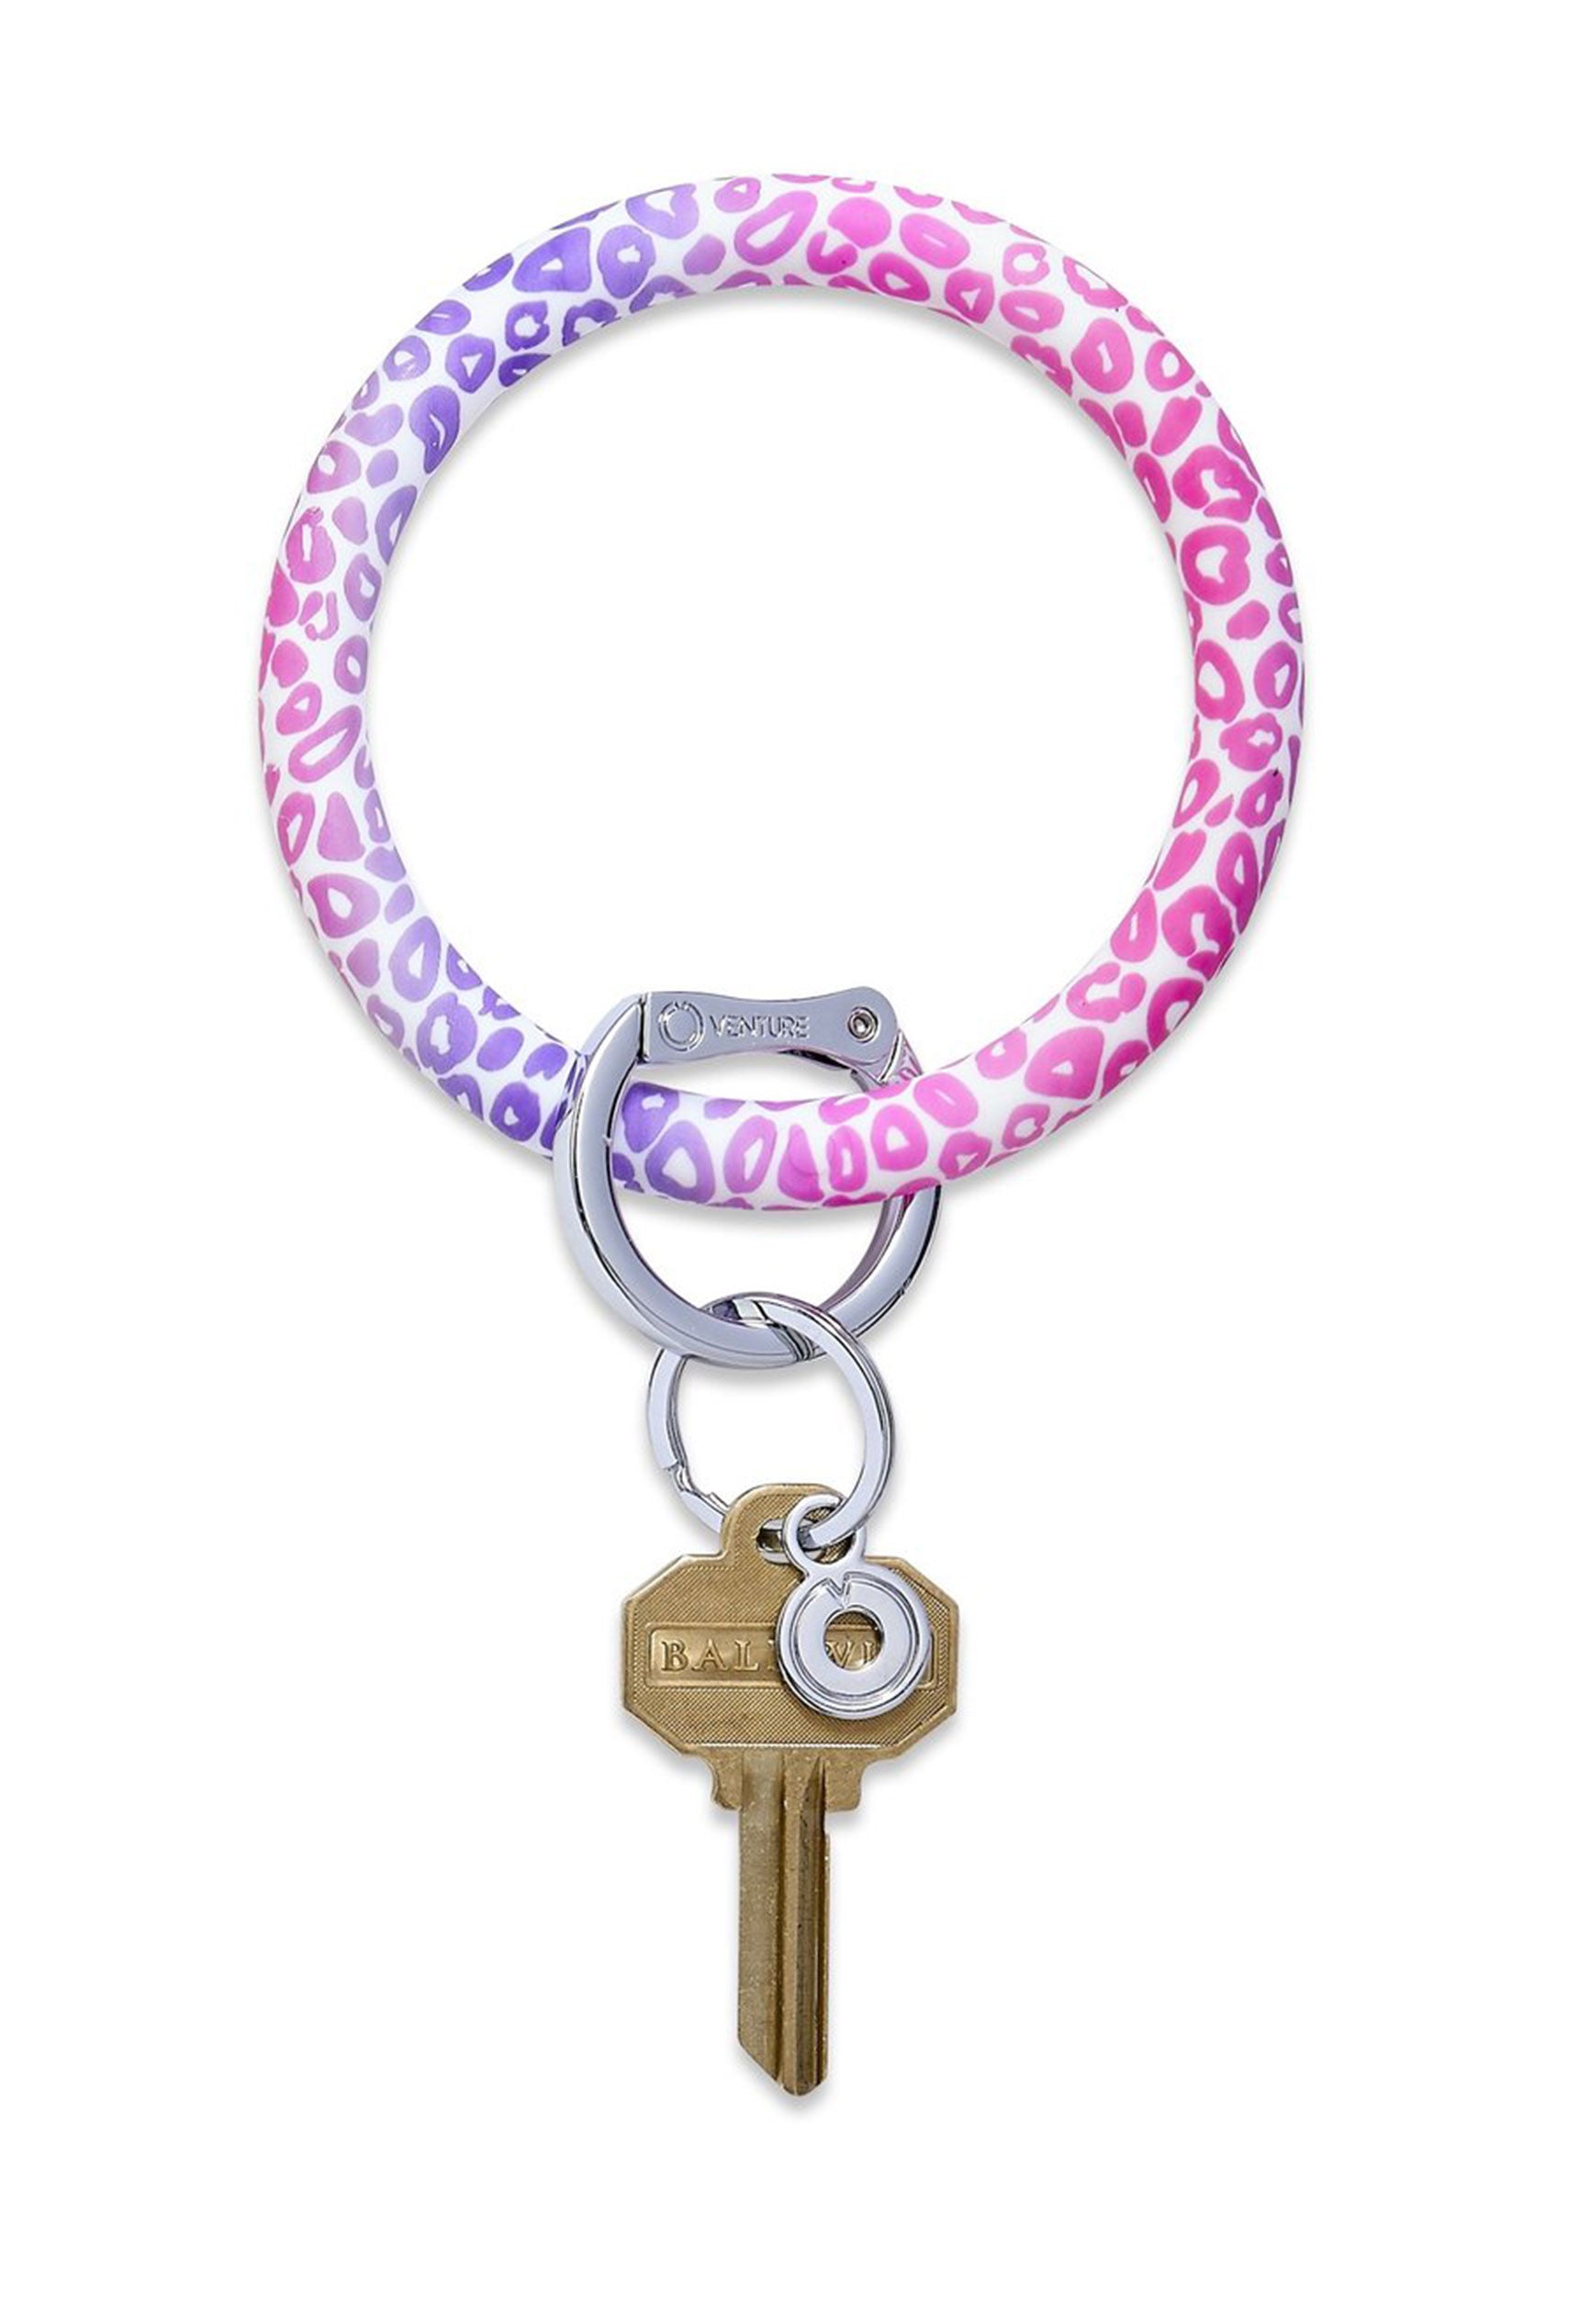 O-Venture Silicone Key Ring Pink Cheetah, pink and purple cheetah print key ring 